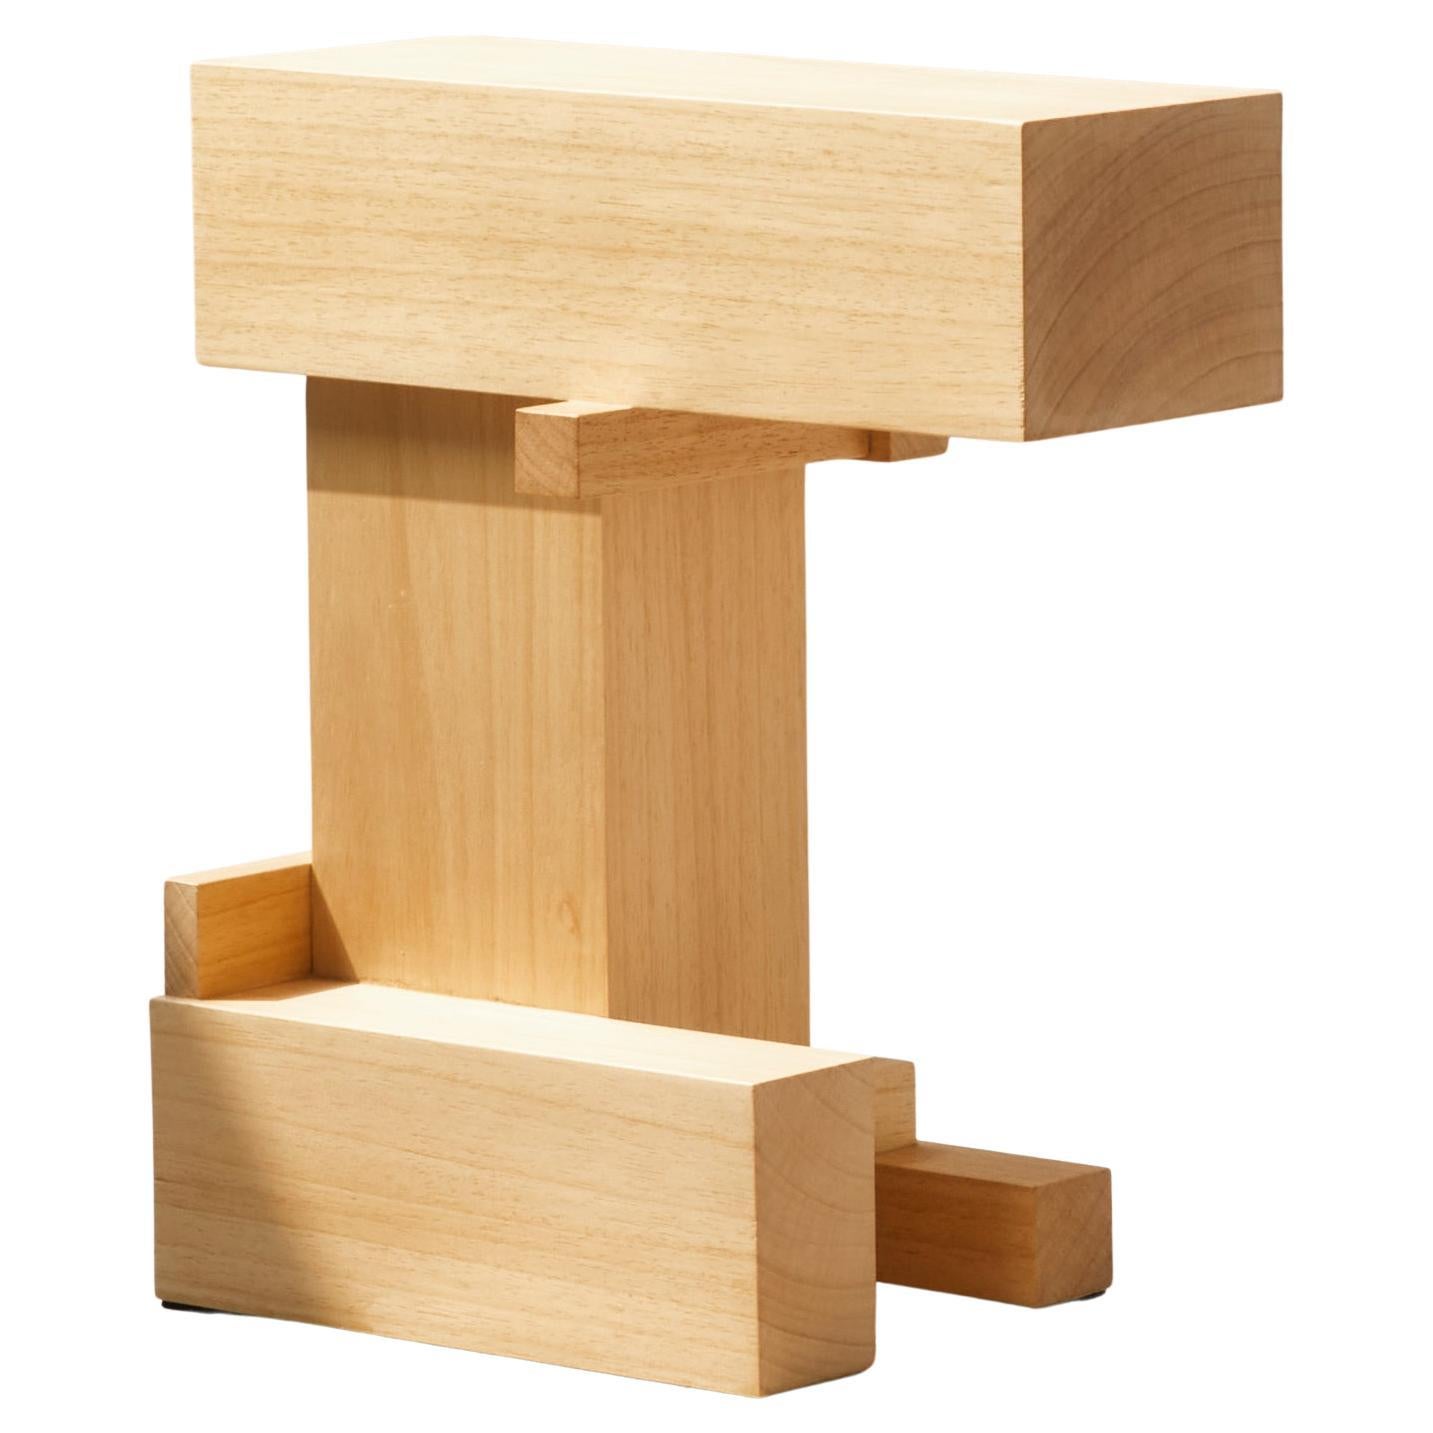 Table d'appoint minimaliste japonaise en Wood Wood Splint #1 par Sho Ota